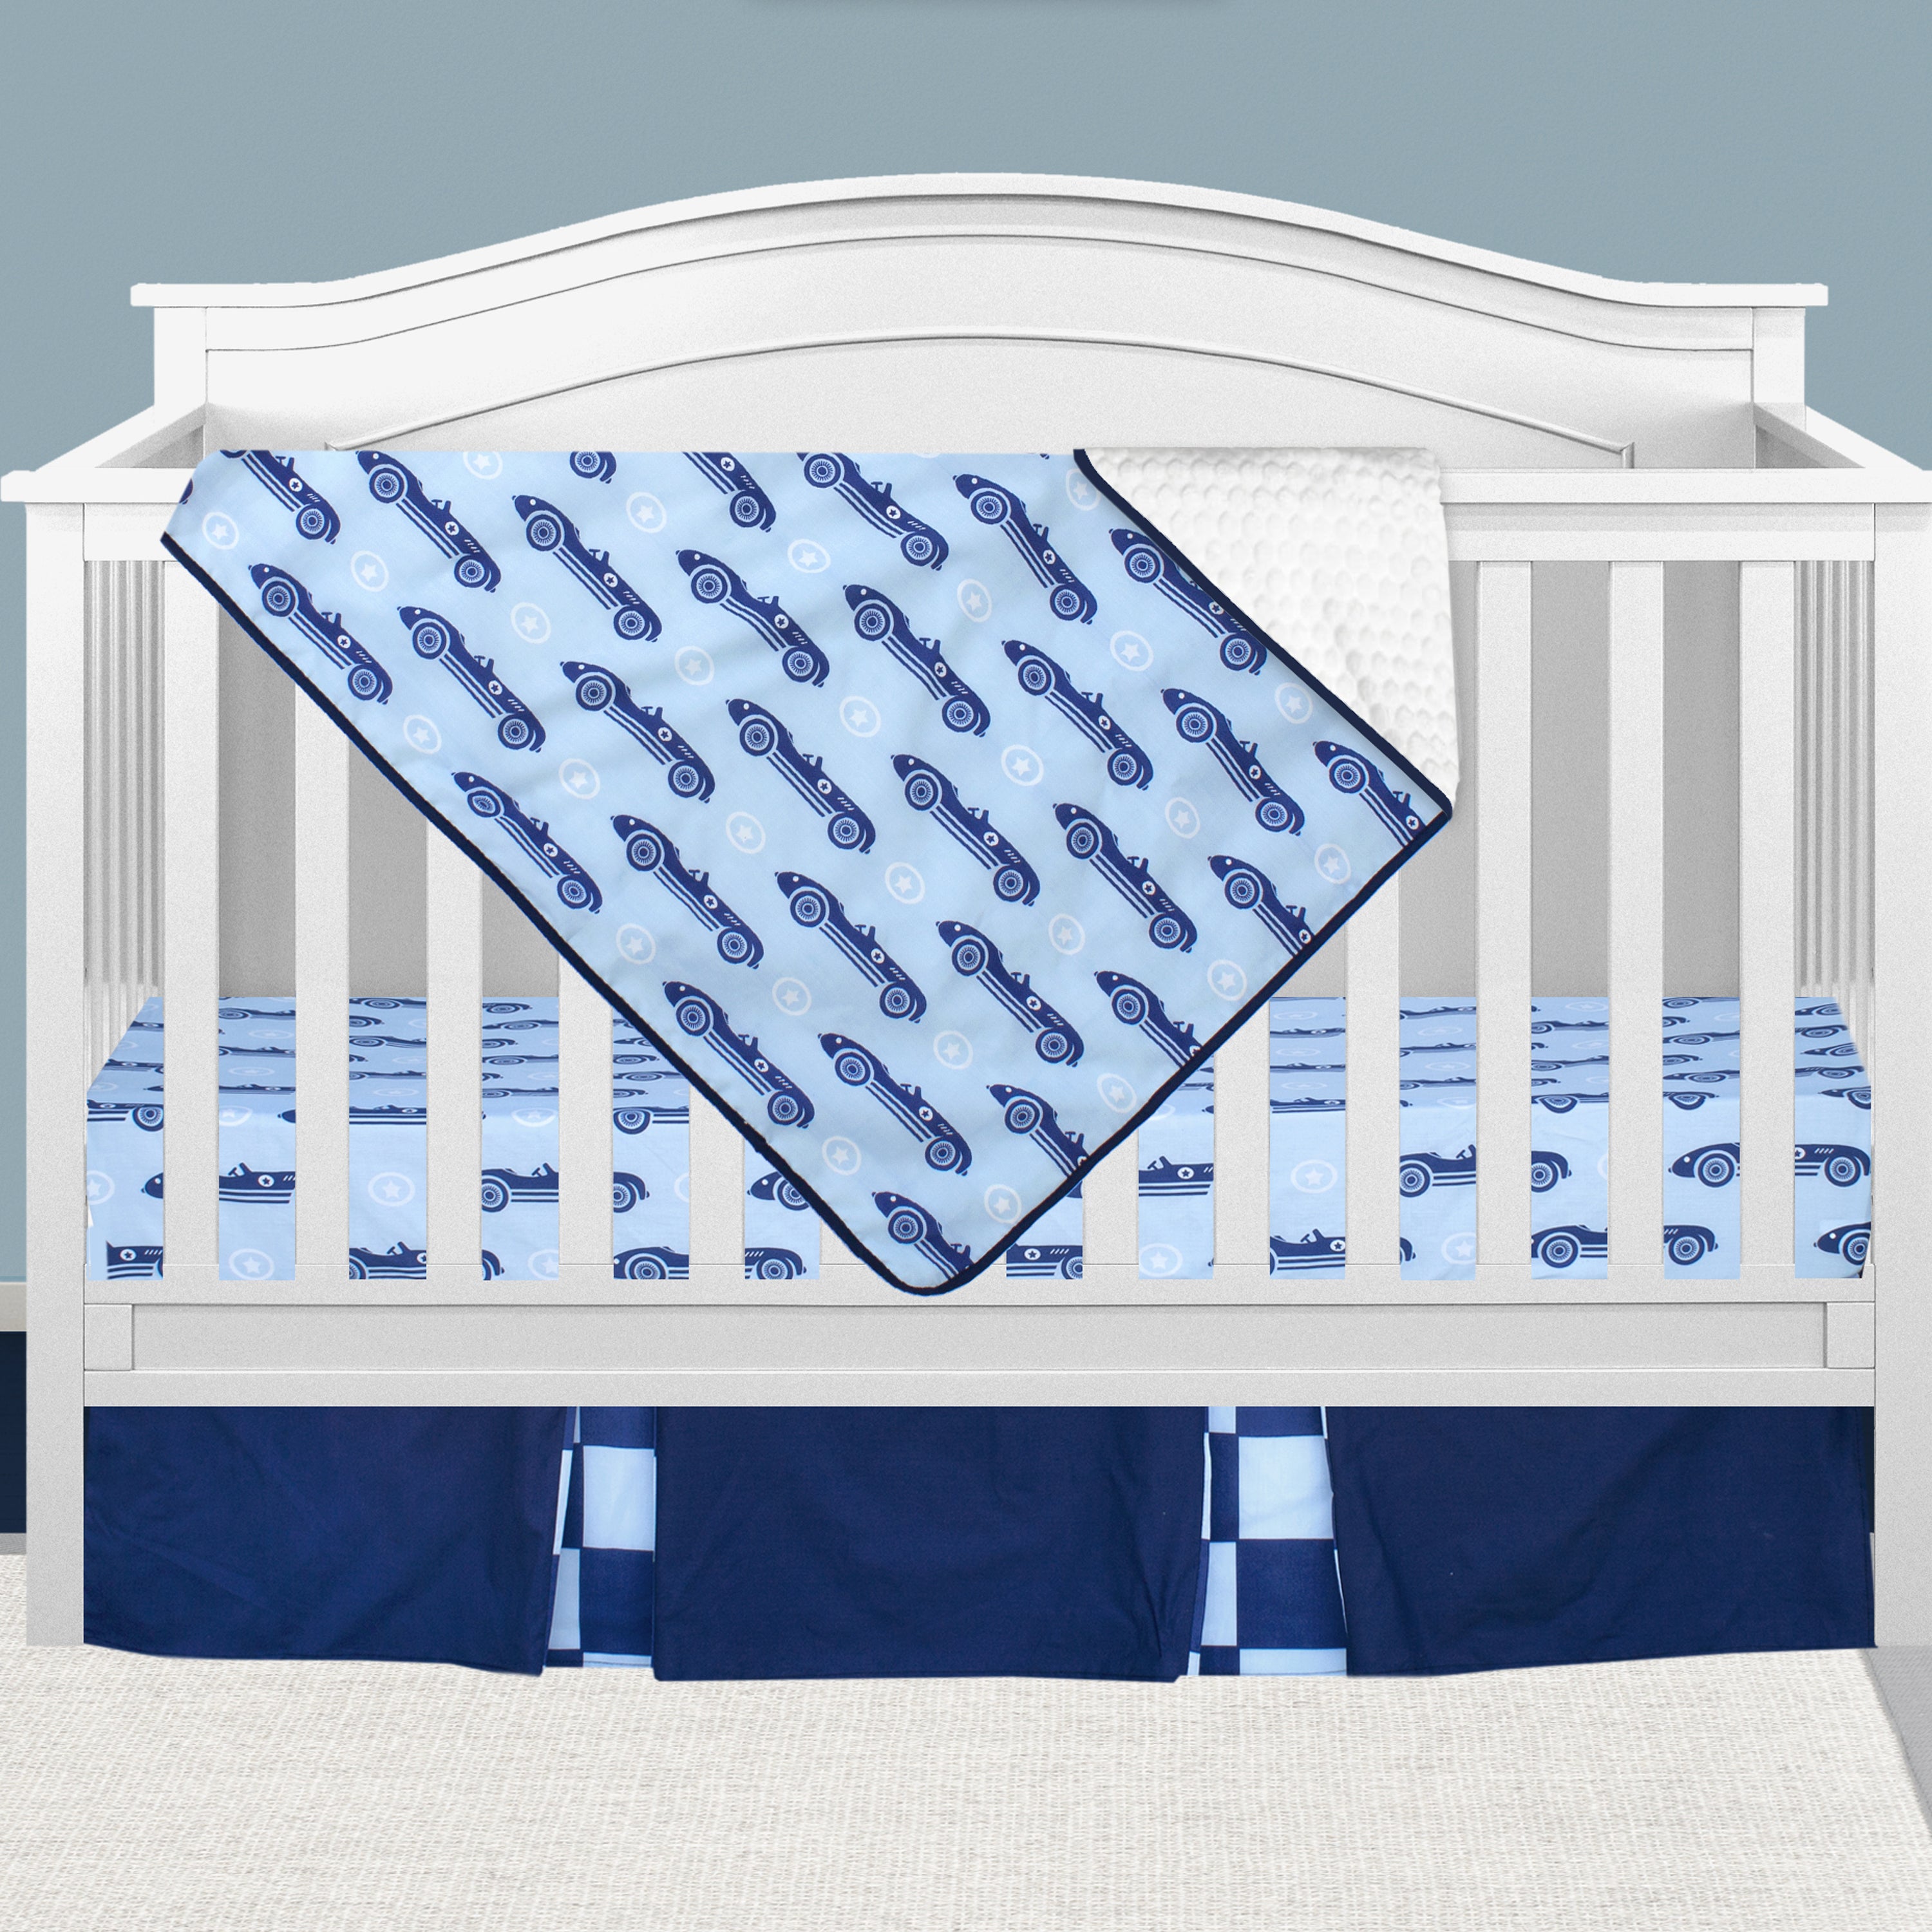 3 Piece Crib Bedding Sets Starting at $49.99 – CribBeddingSets.com